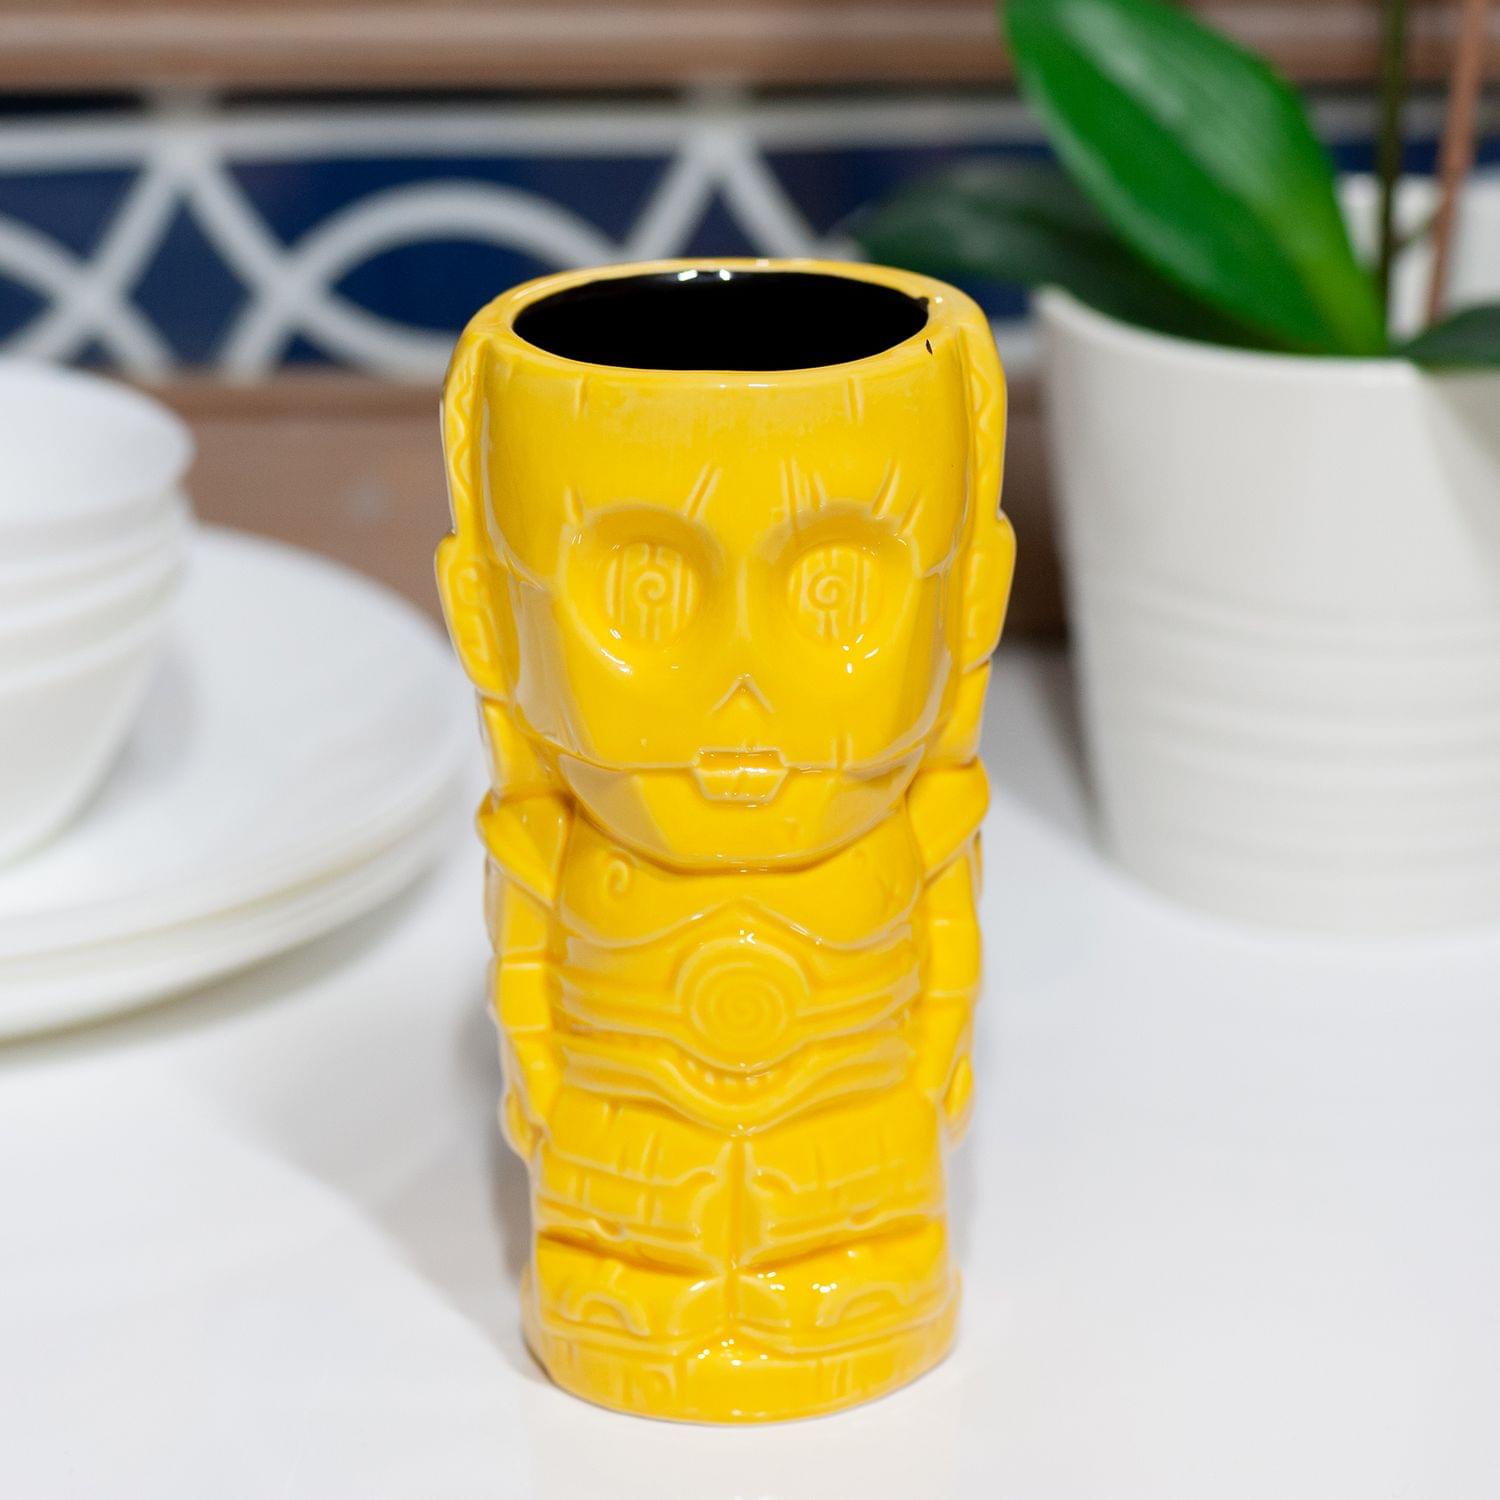 Geeki Tikis Star Wars C-3PO Mug | Crafted Ceramic | Holds 14 Ounces